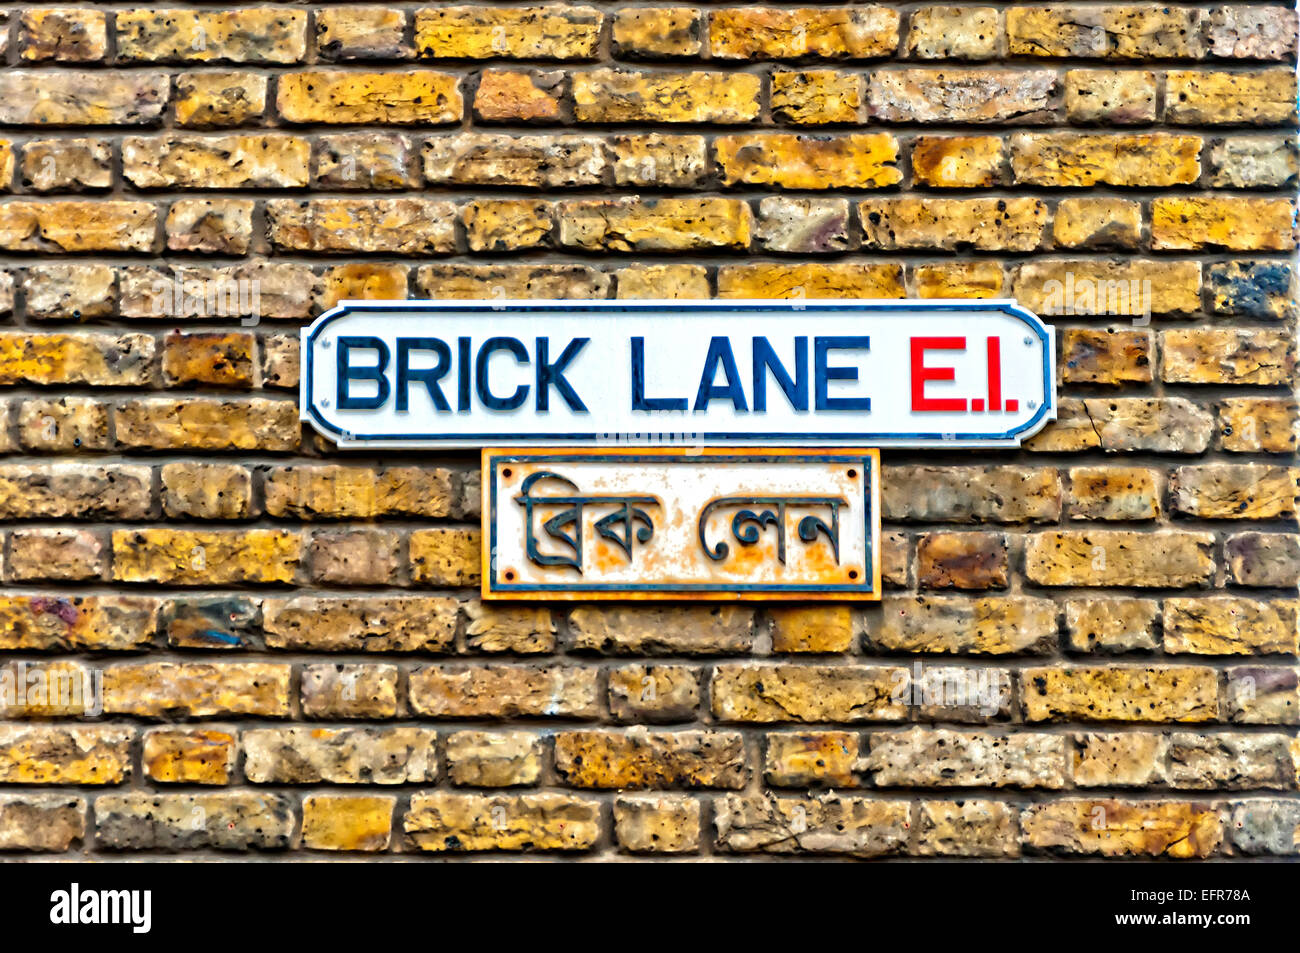 Brick Lane street sign in East End, Londres - Royaume-Uni Banque D'Images